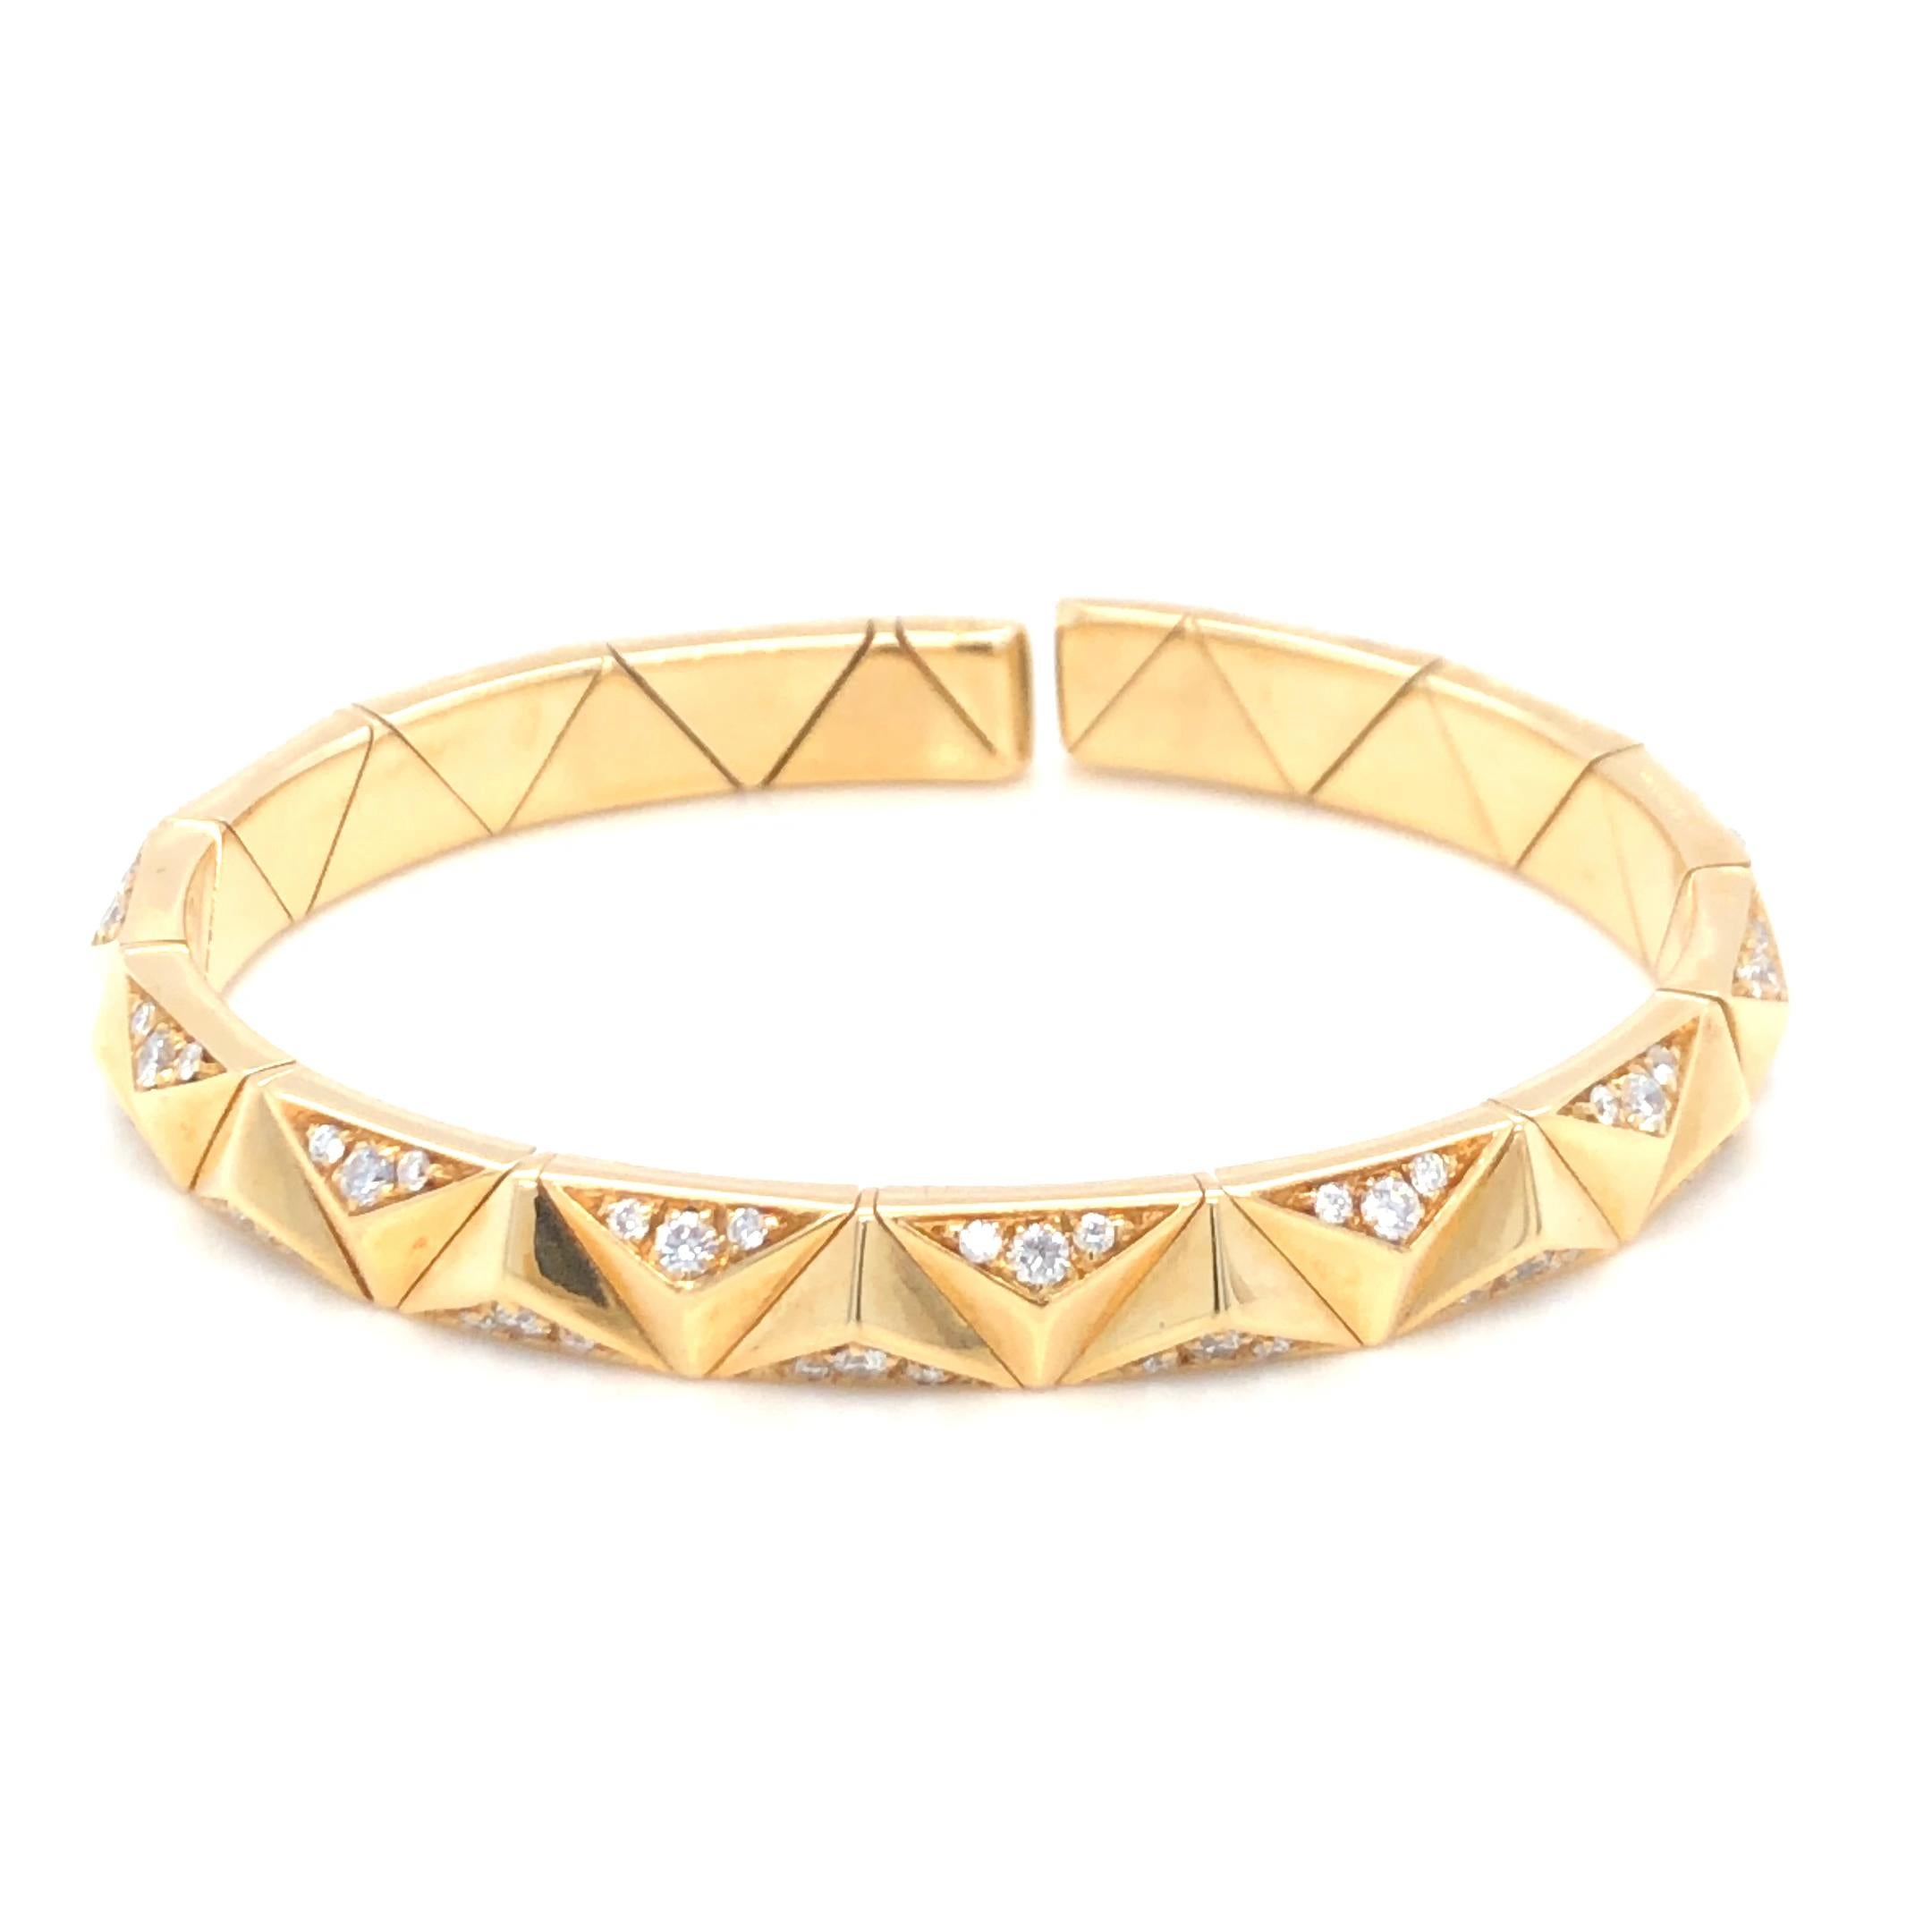 Estate Bulgari Contemporary Diamond Bracelet in 18K Yellow Gold. The bracelet features approximately 0.85ctw of brilliant round cut diamonds. Flexible open bangle. 
6